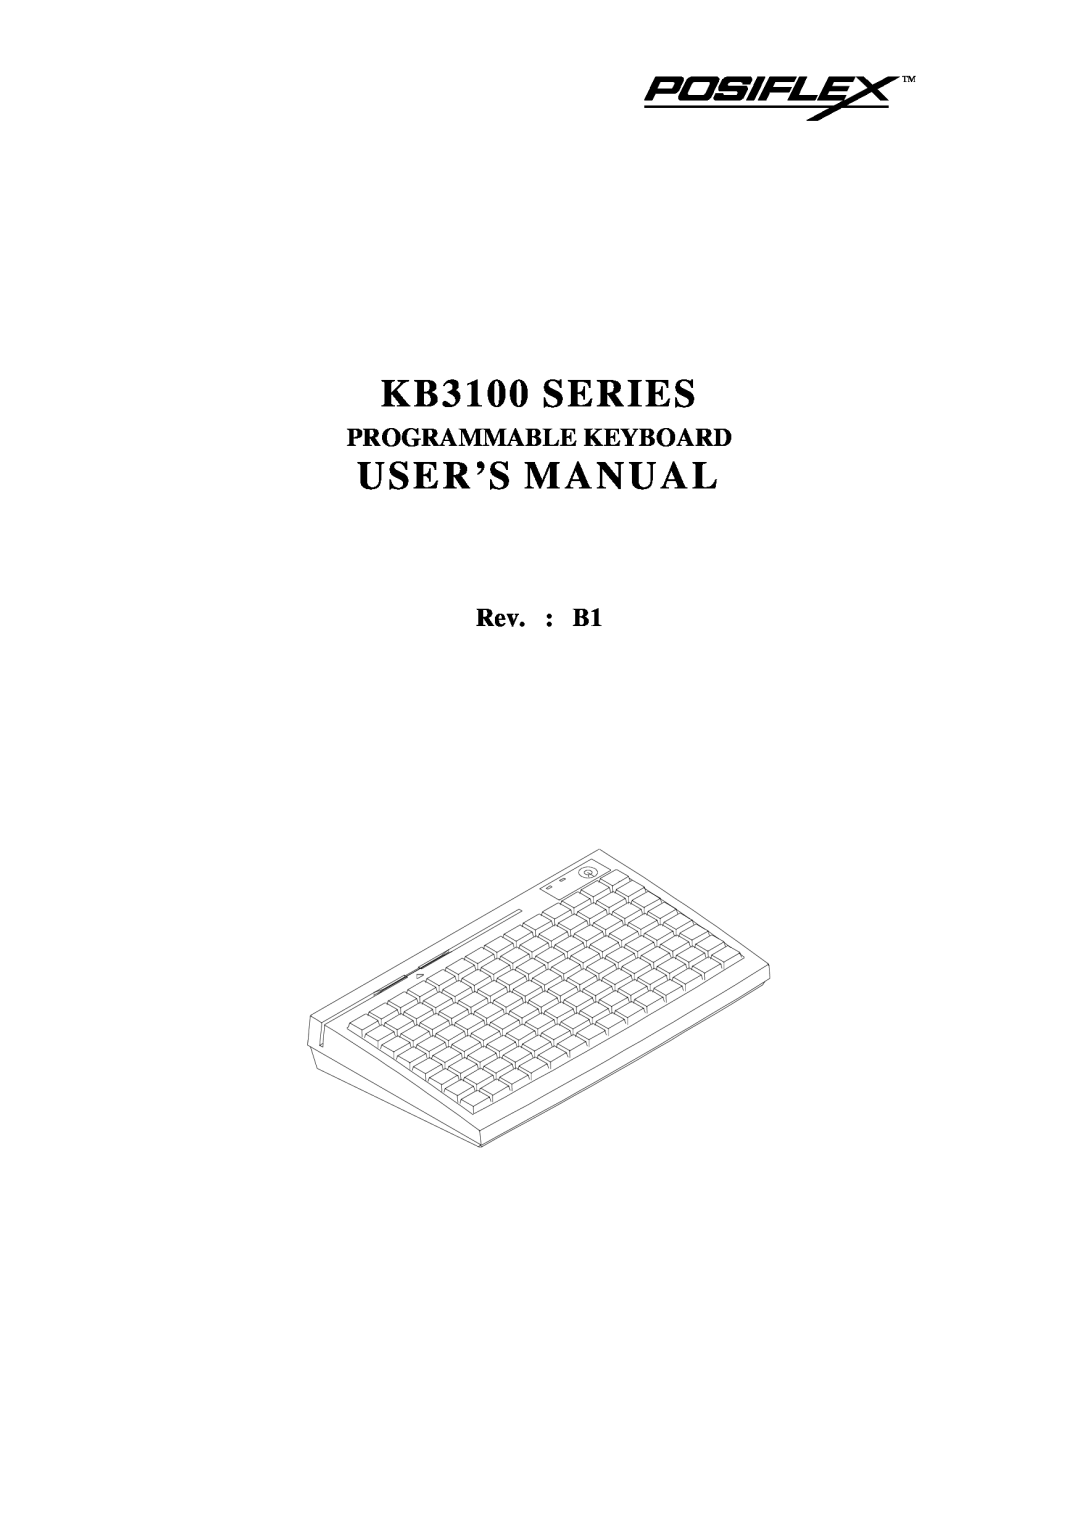 Mustek user manual KB3100 SERIES, User’S Manual, Programmable Keyboard, Rev. B1 